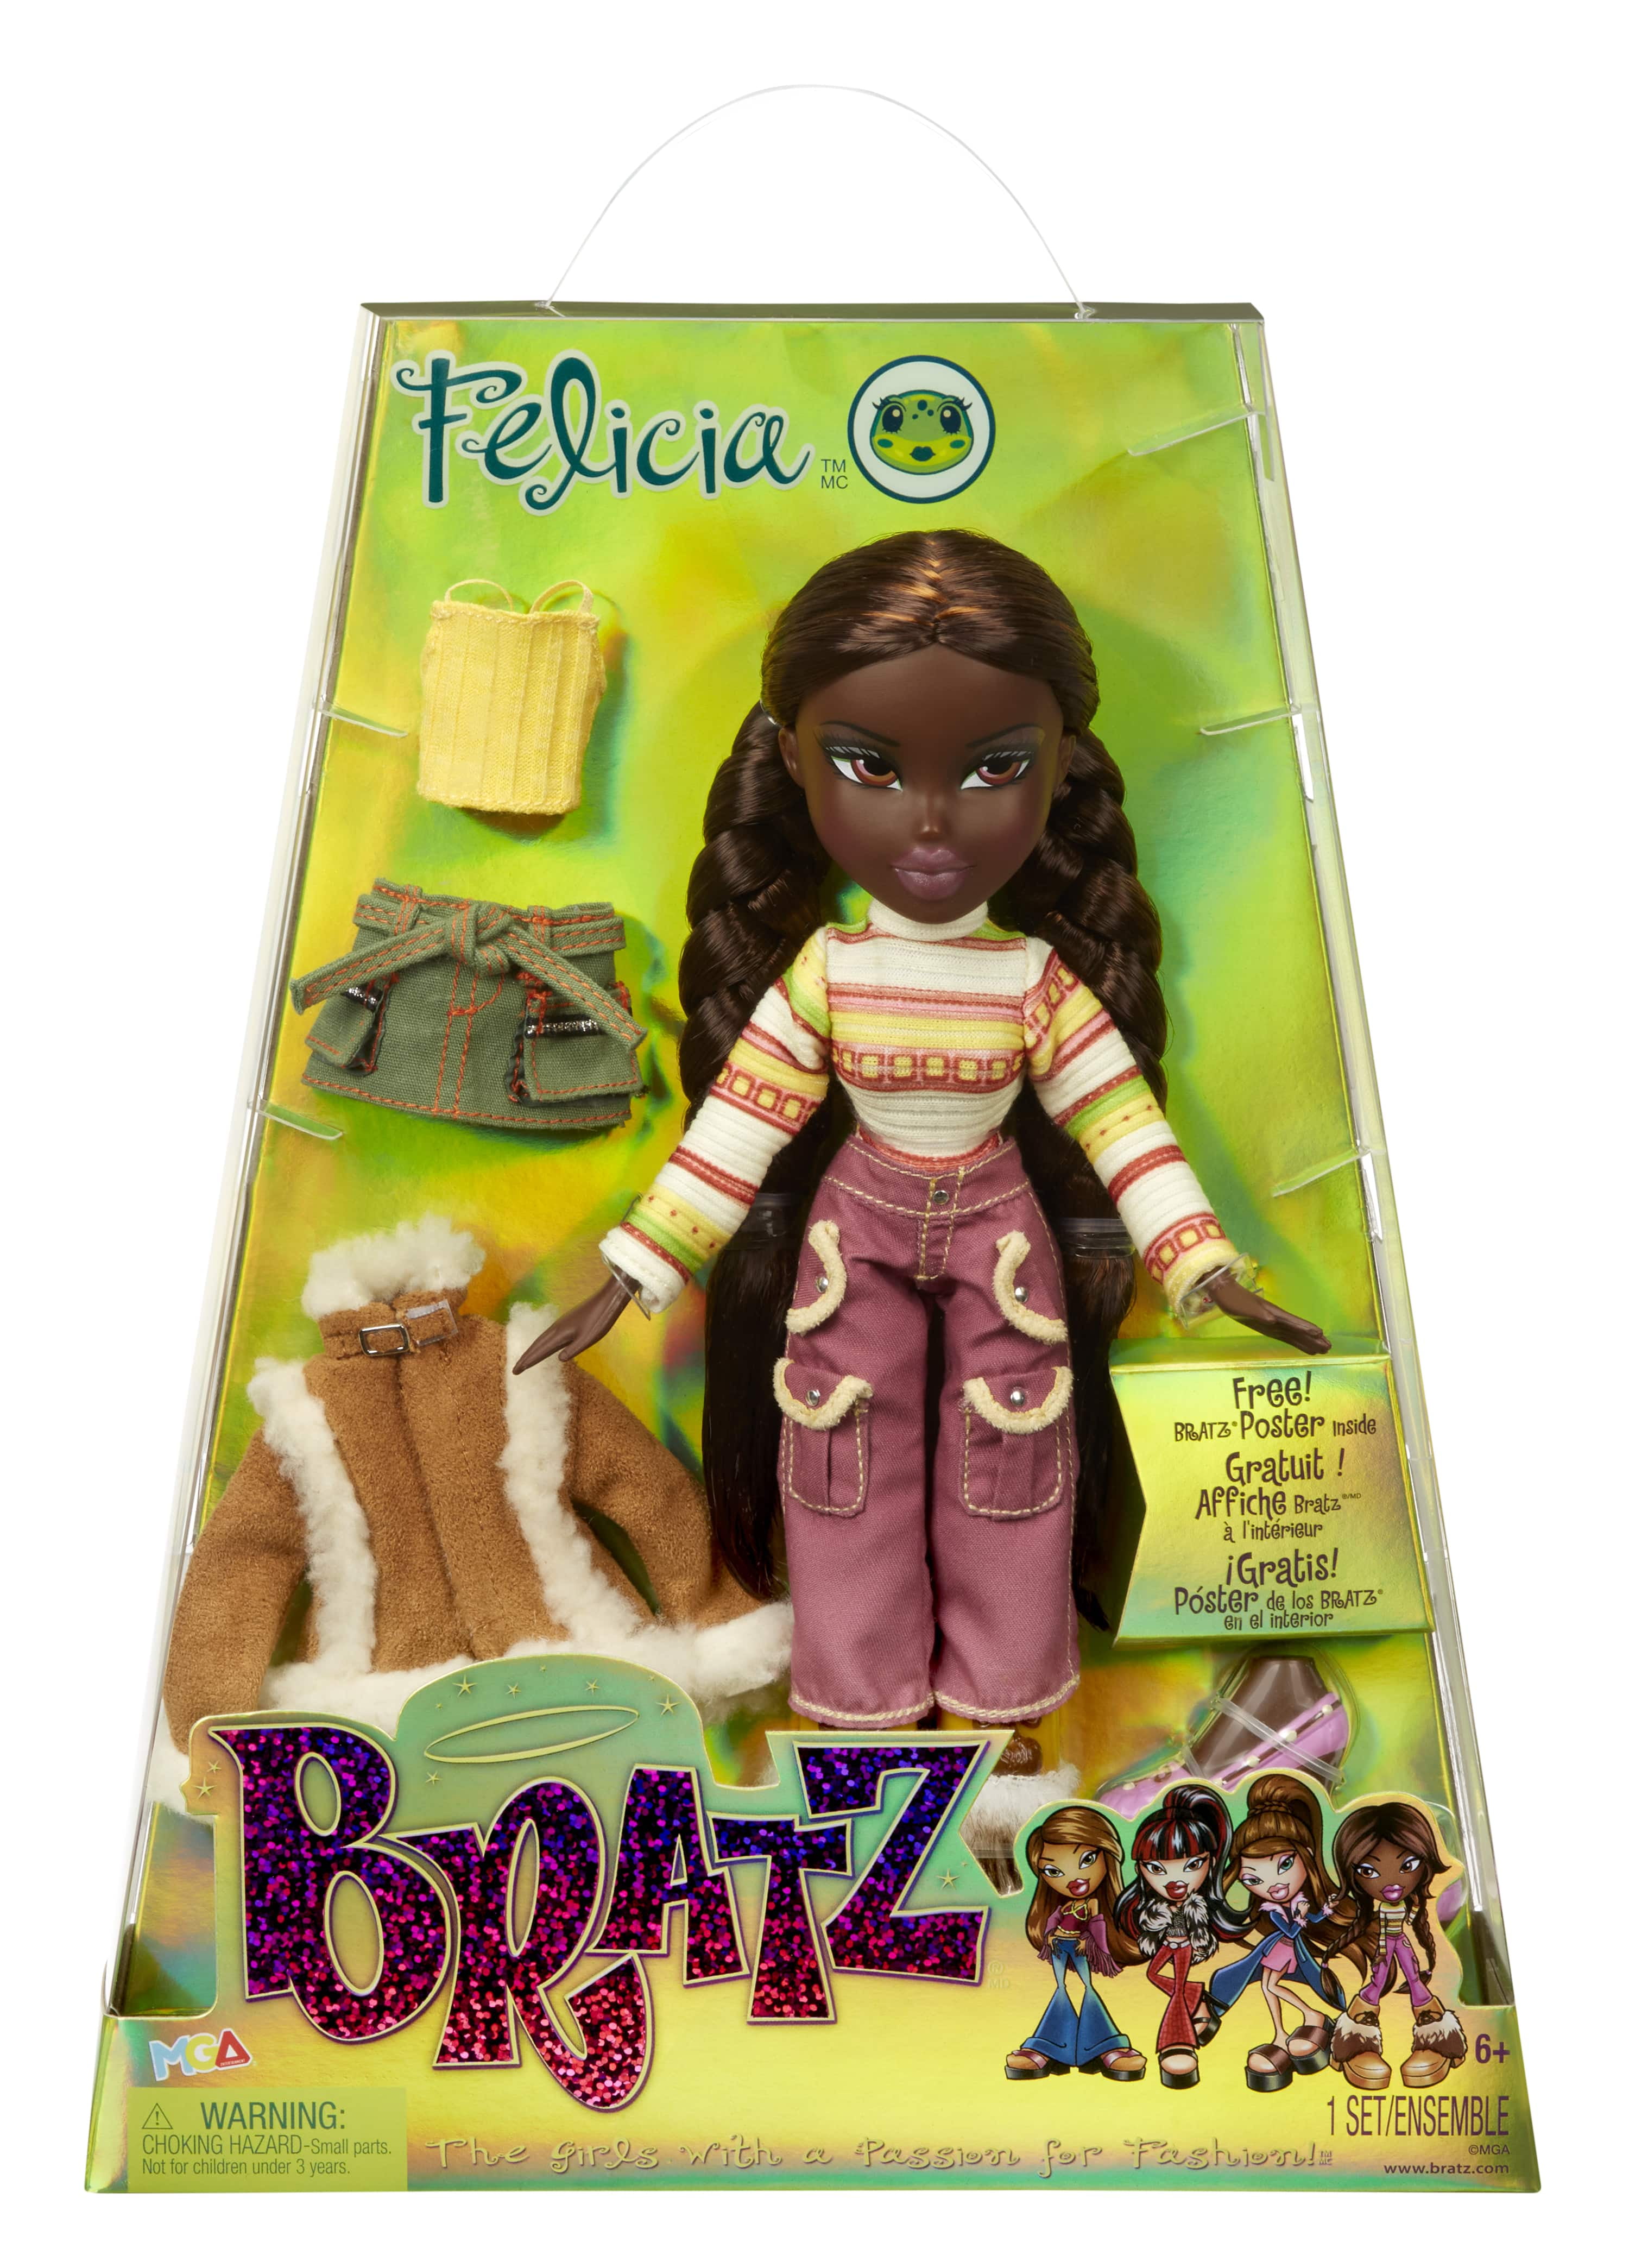 Bratzillaz Pet Doll, Kissifuss, Great Gift for Children Ages 6, 7, 8+